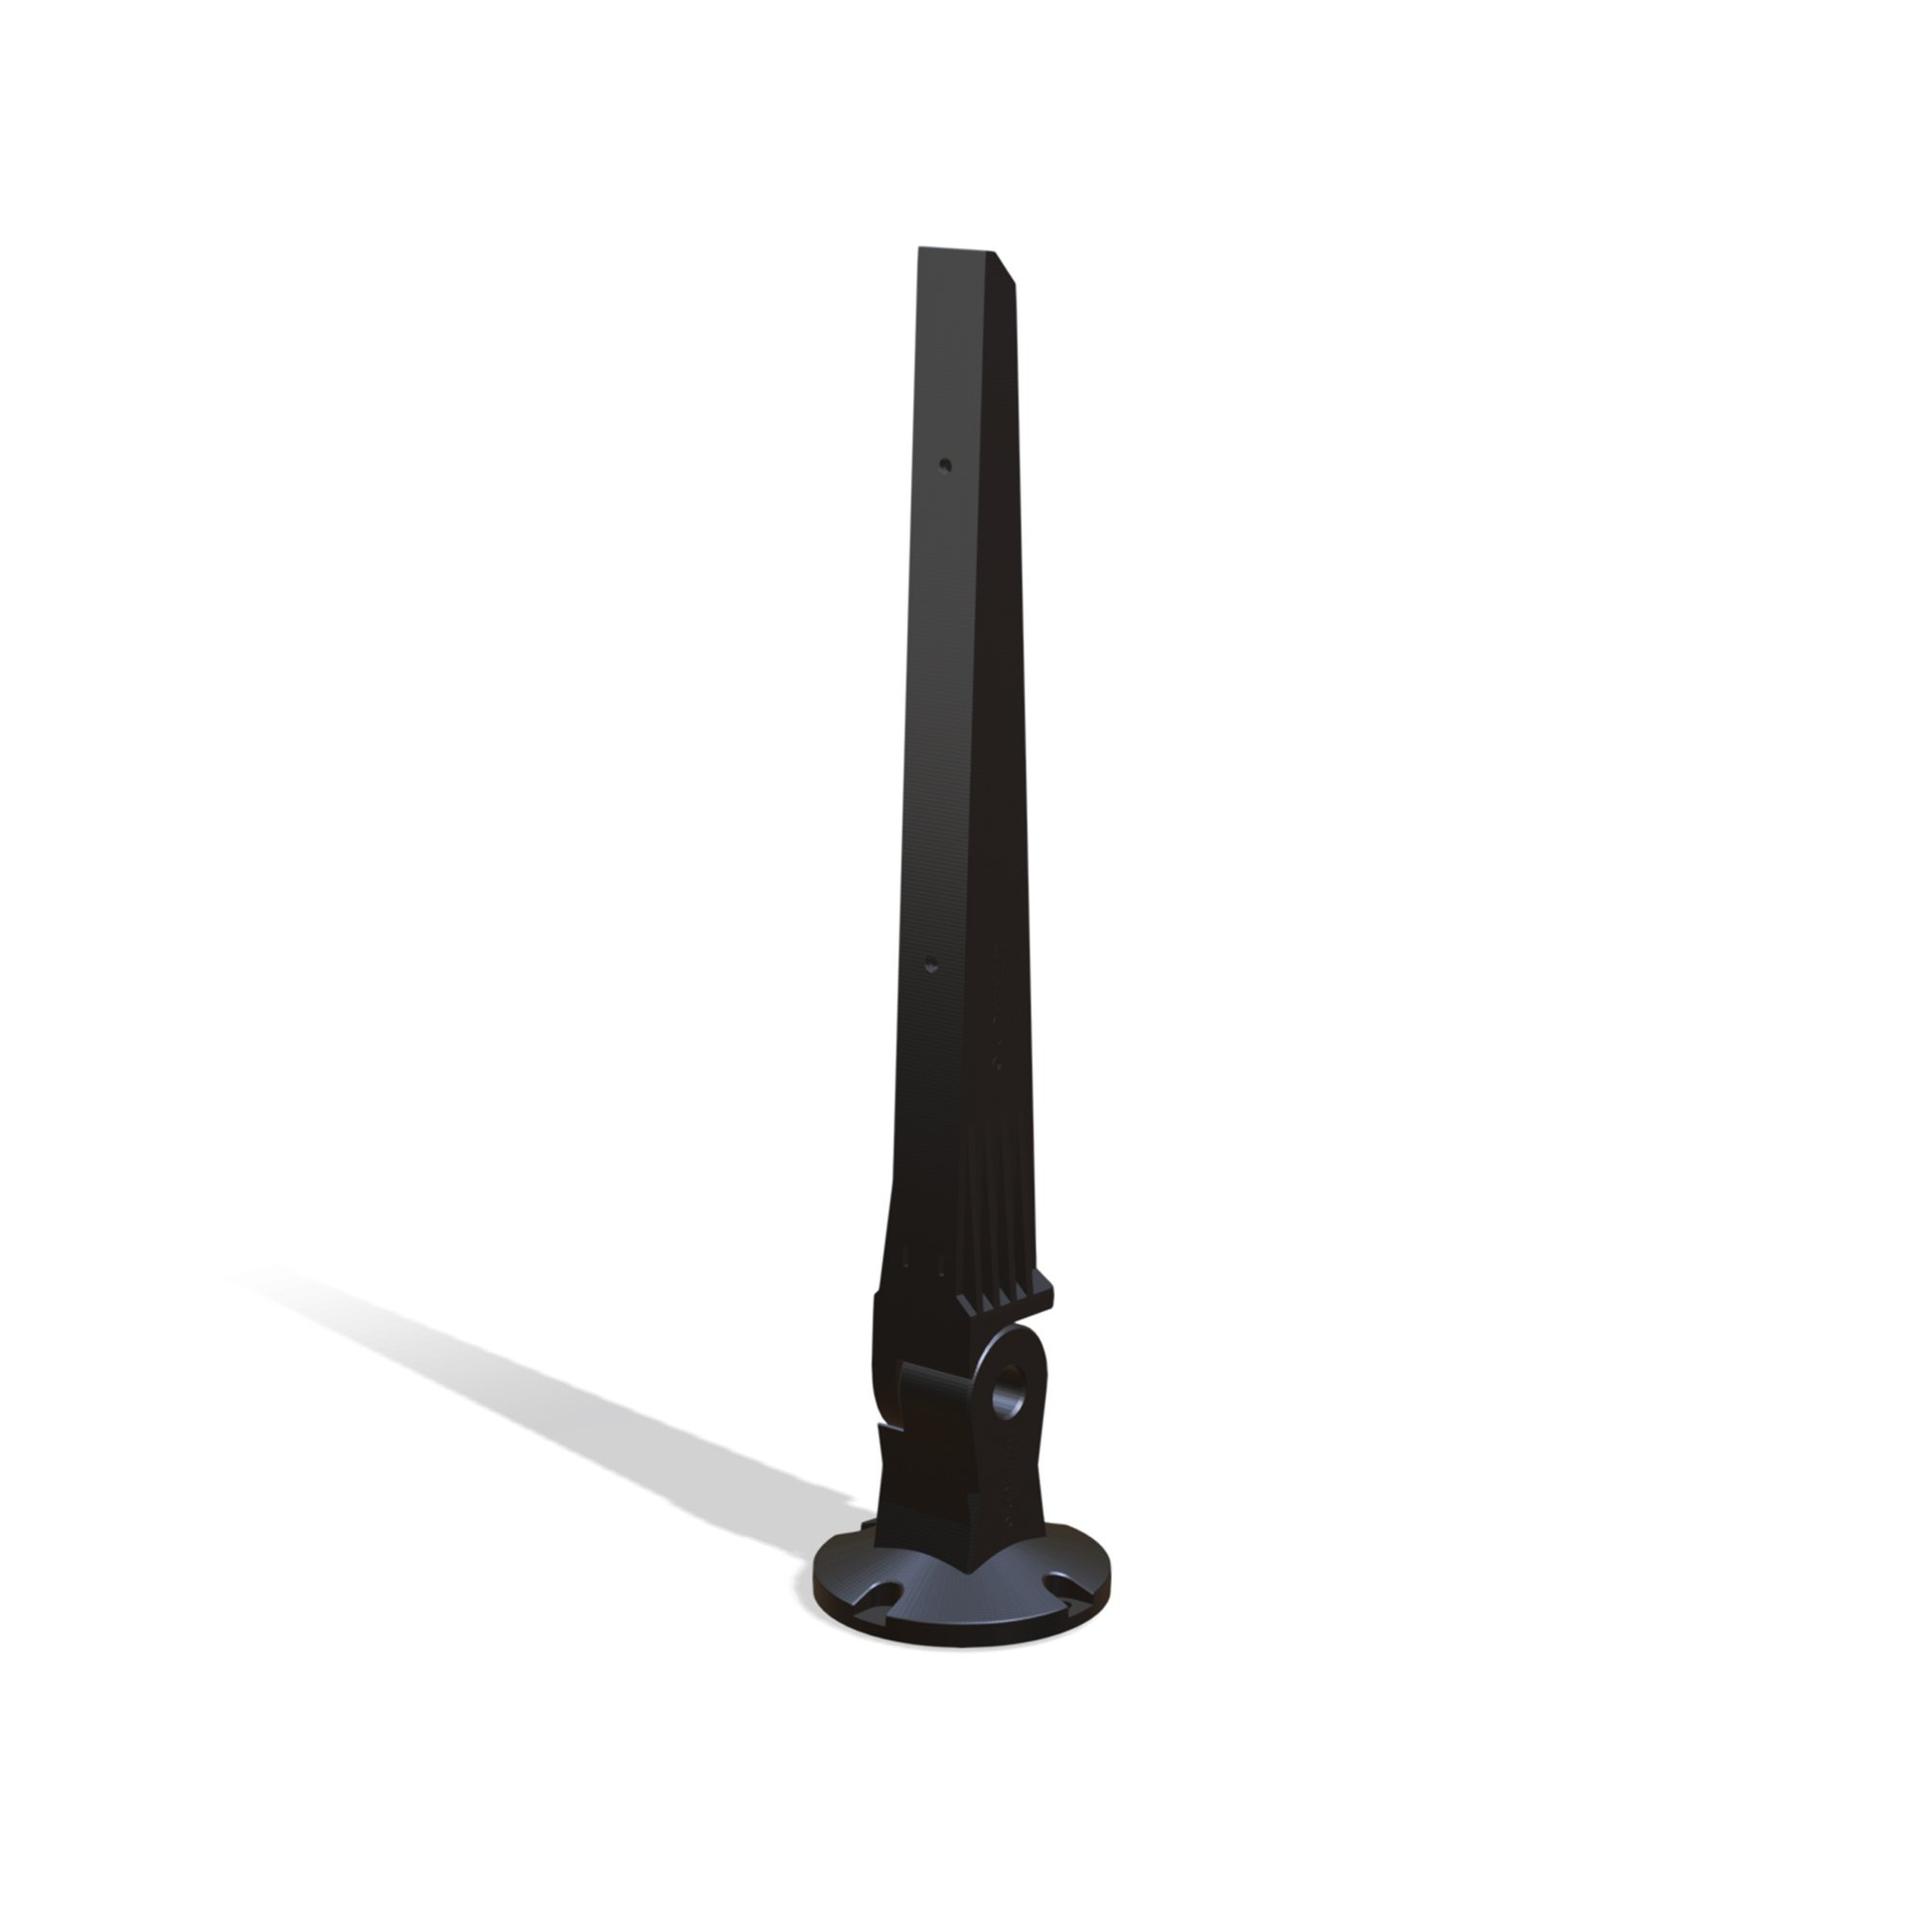 Lithe Audio Garden Spike (Black) for iO1 Speakers Image